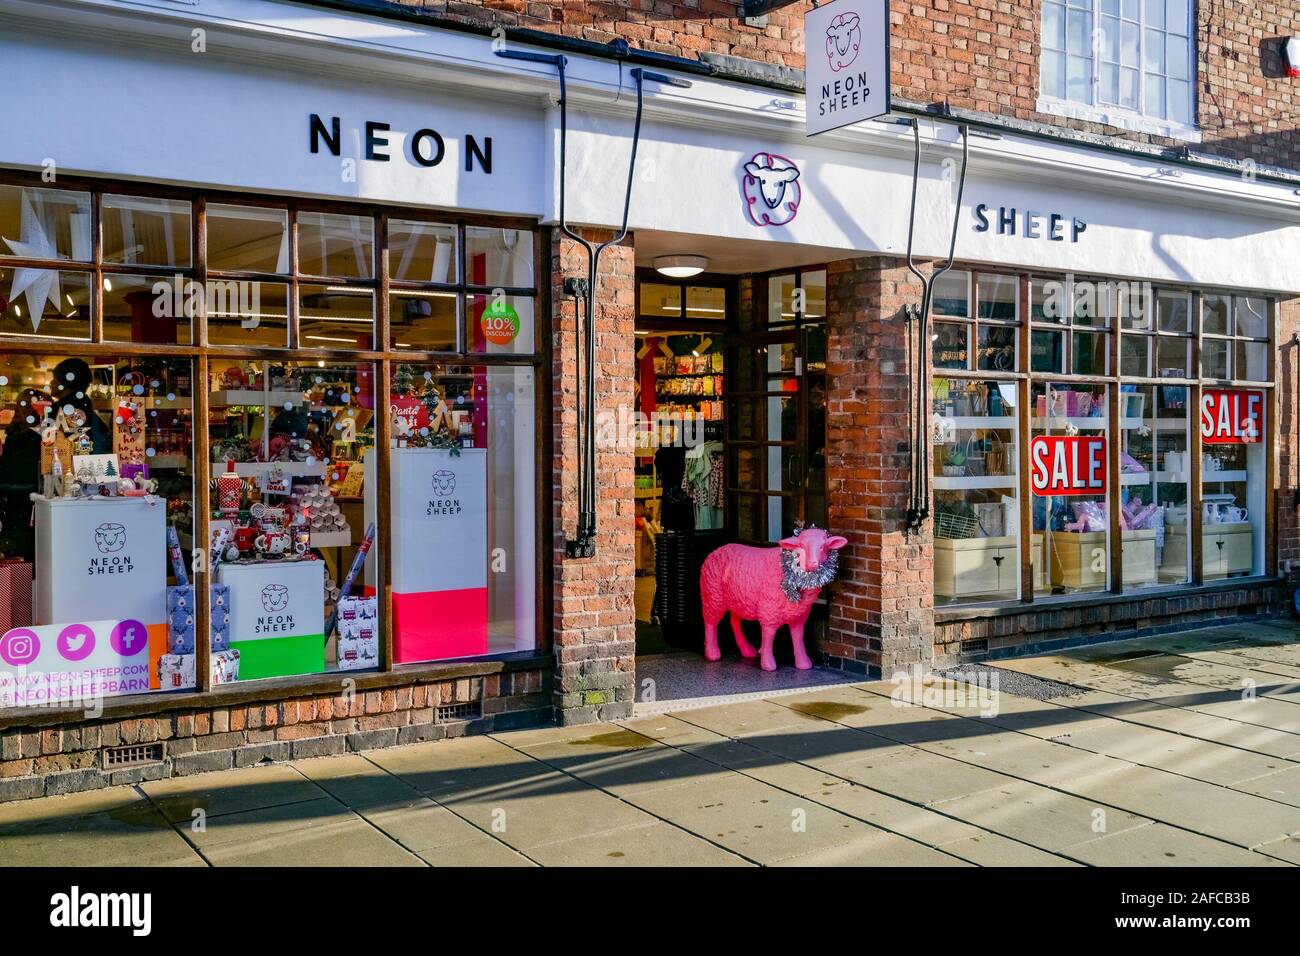 Neon Sheep shop, Stratford upon Avon, Warwickshire, England, UK Stock Photo